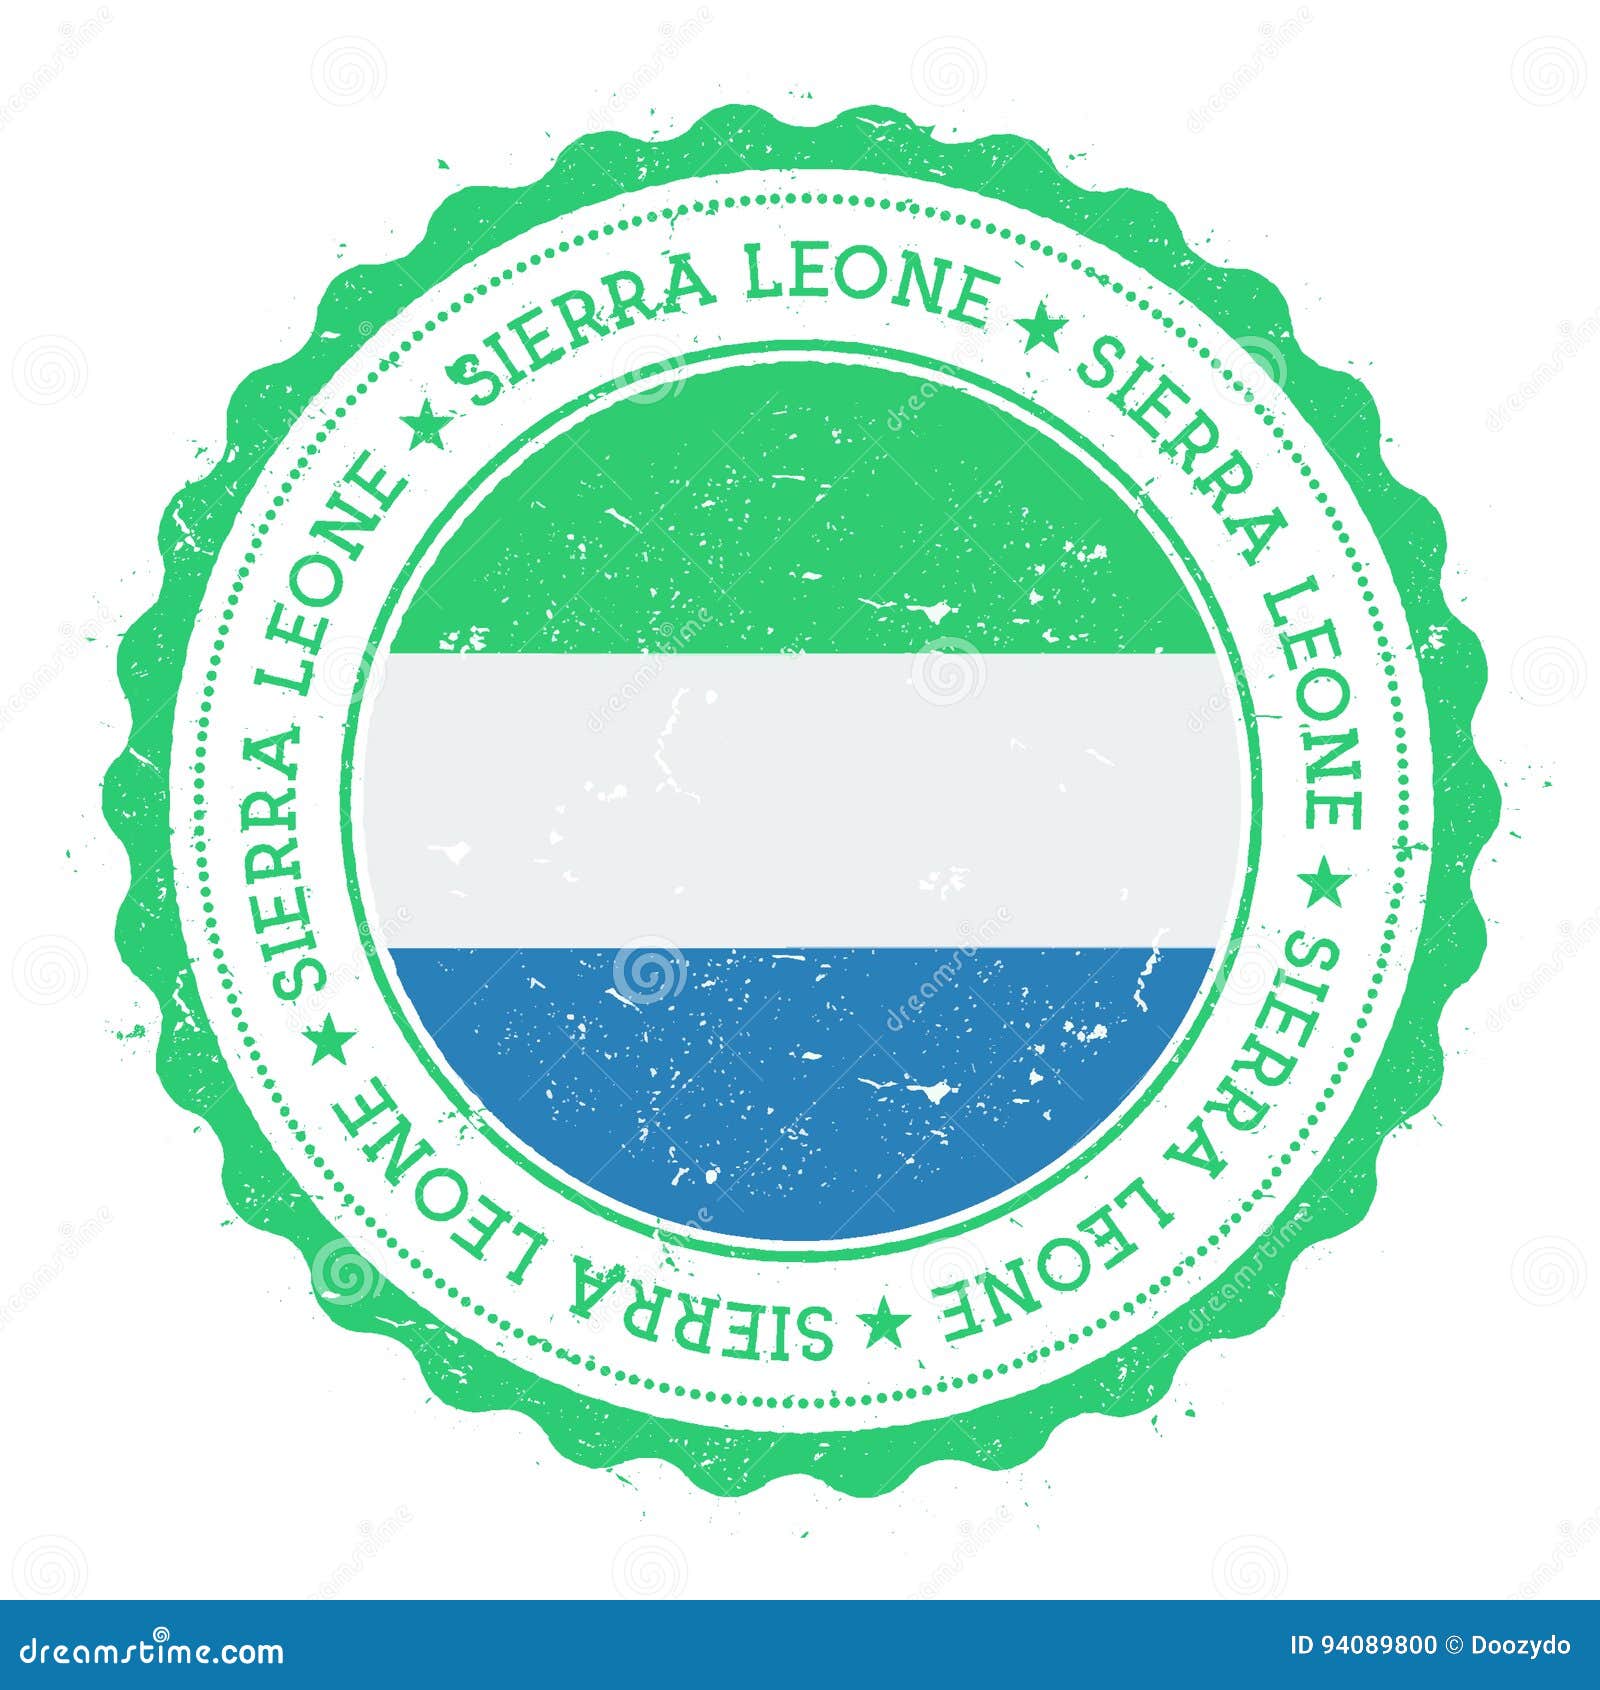 grunge rubber stamp with sierra leone flag.